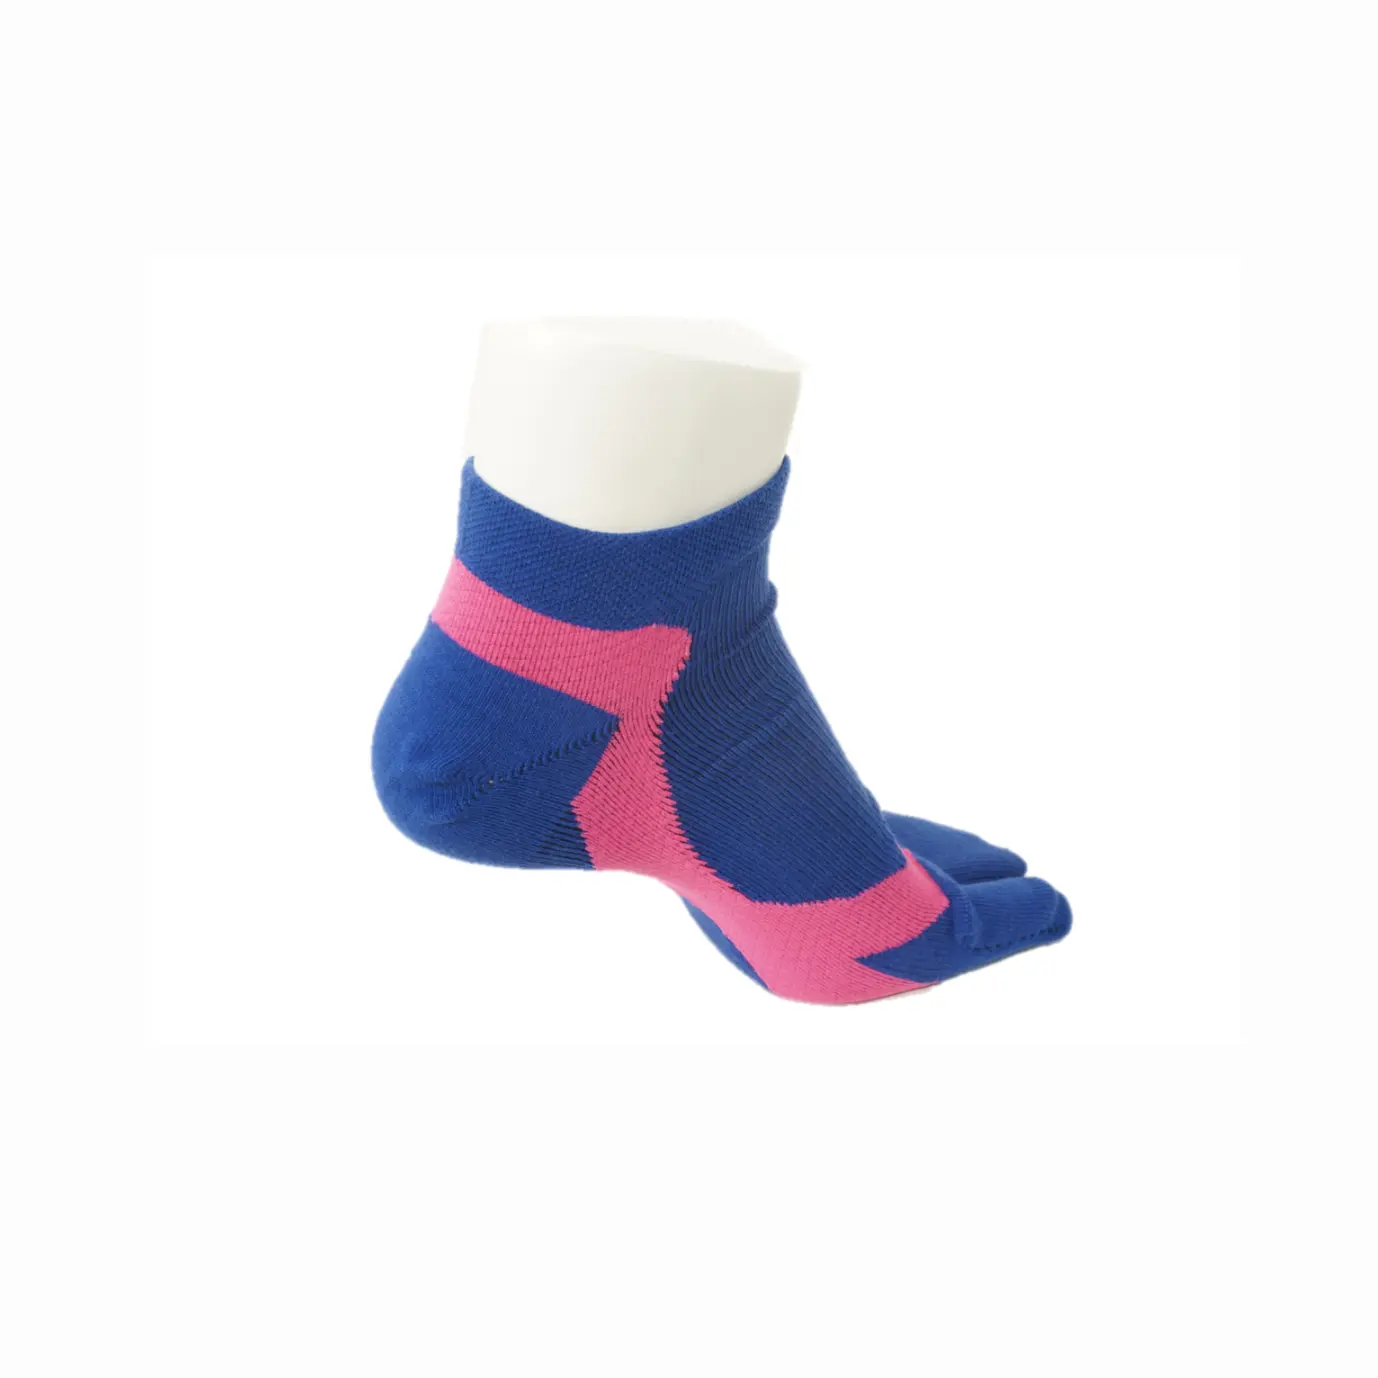 Black knee high cotton mens socks colourful cool compression